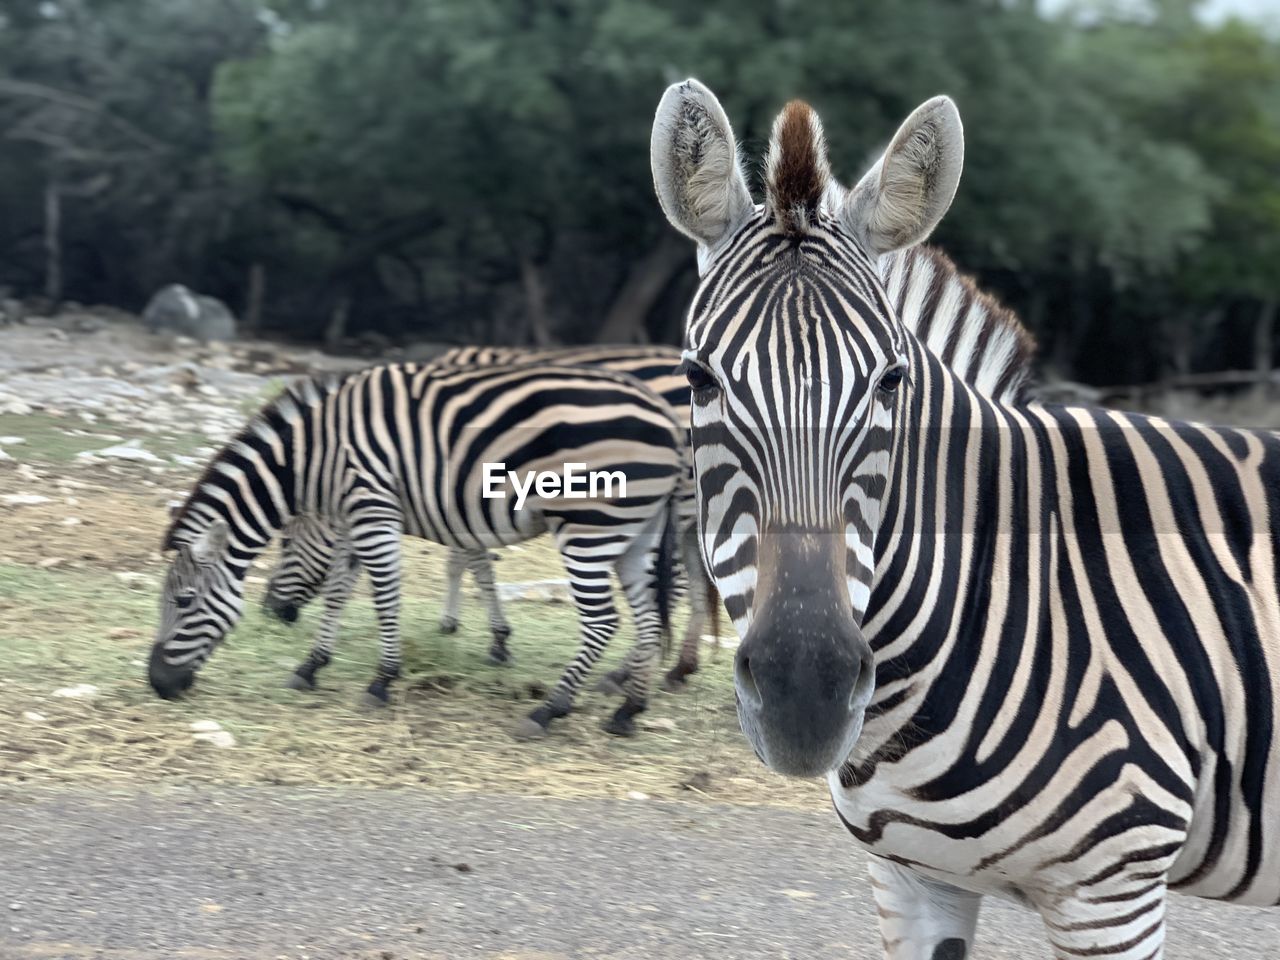 Zebras standing in a zebra